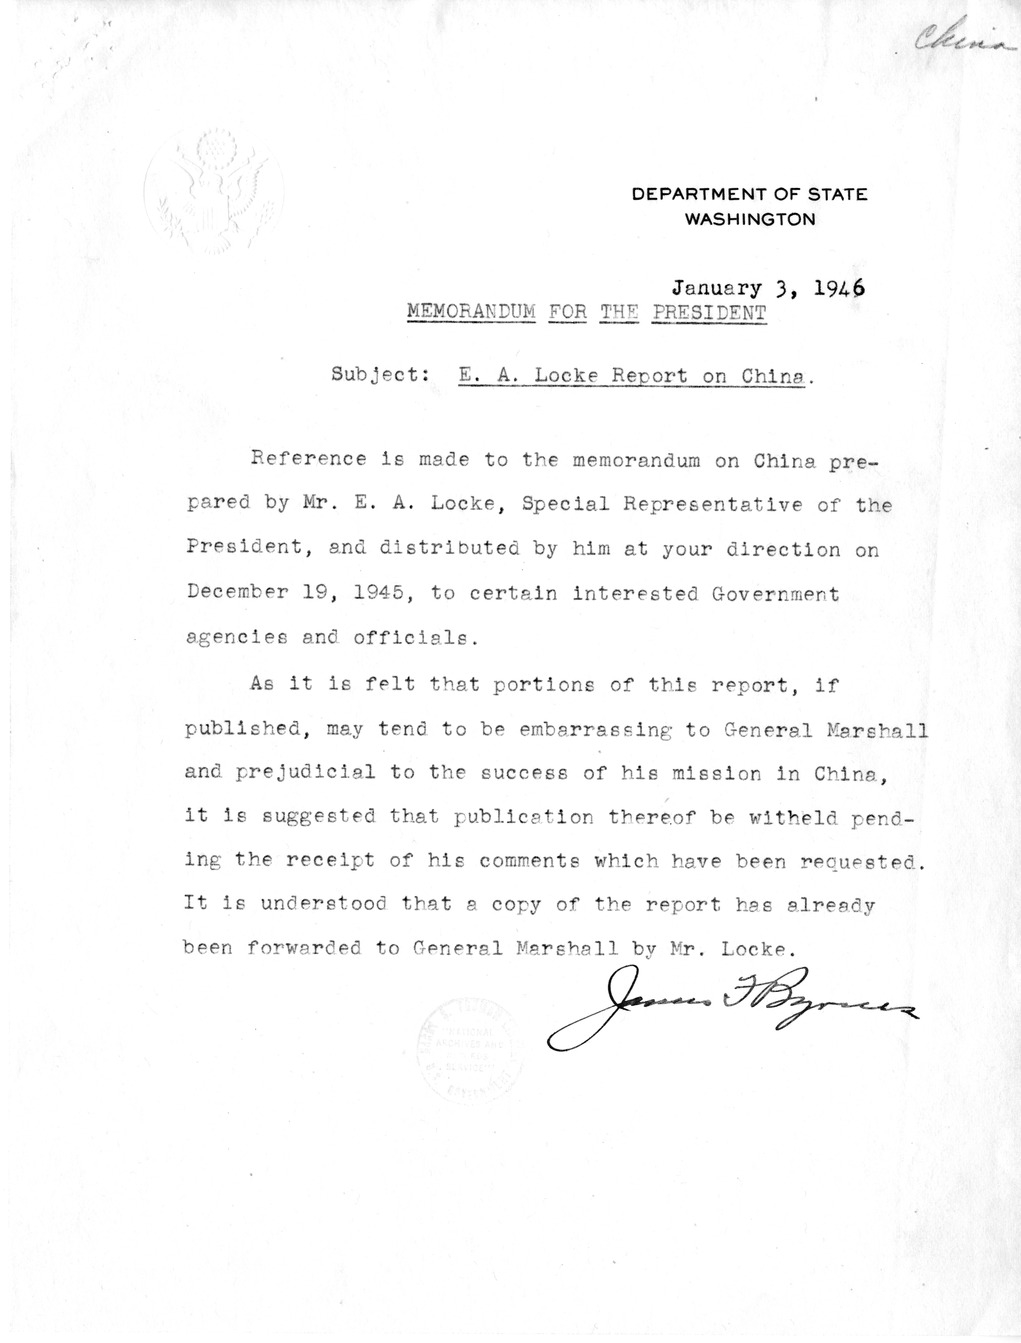 Memorandum from Secretary of State James Byrnes to President Harry S. Truman, with Attached Memoranda